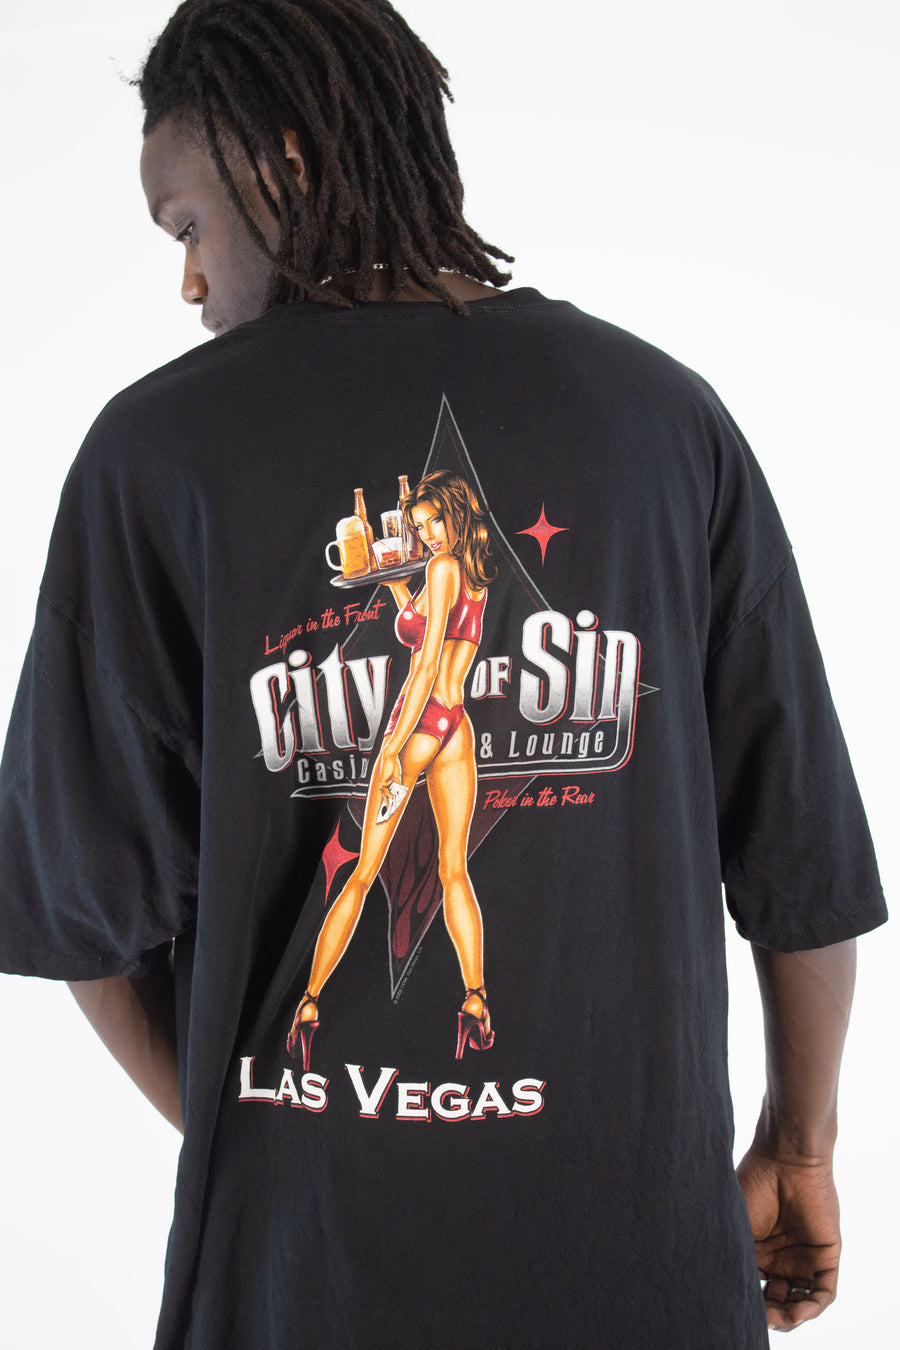 Las Vegas City of Sin 2008 Poker T-shirt in Black